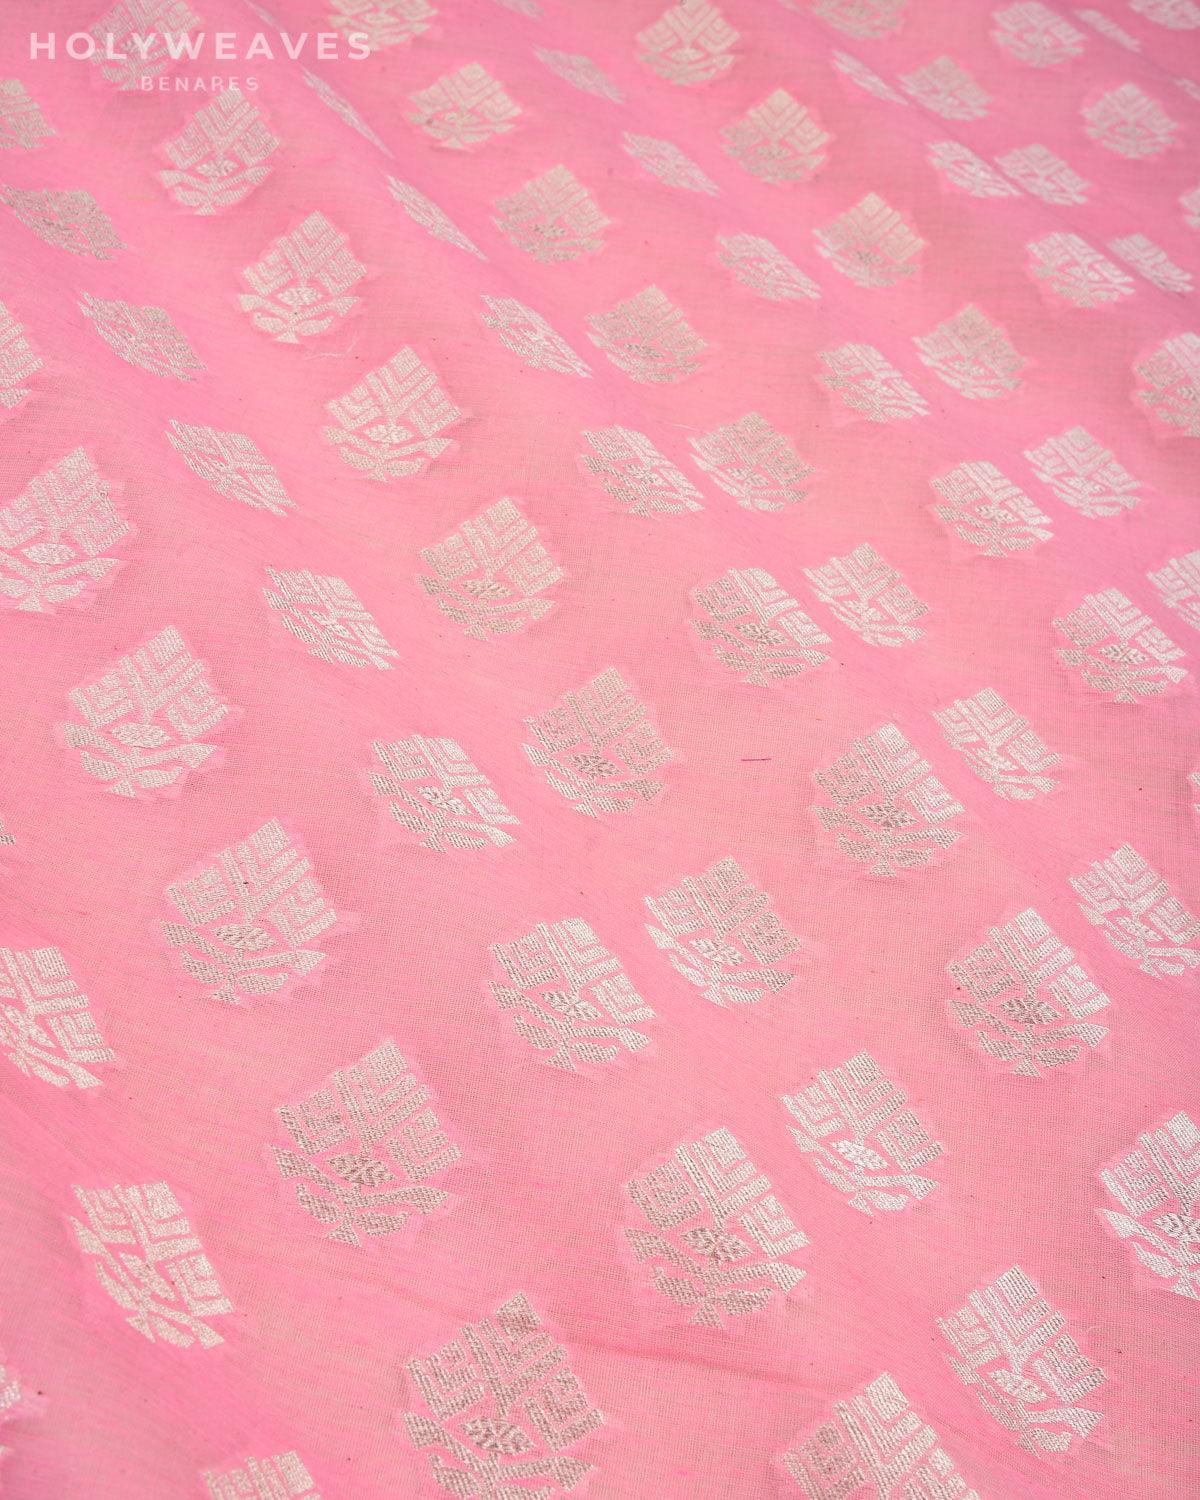 Pink Banarasi Silver Zari Buti Cutwork Brocade Handwoven Cotton Silk Fabric - By HolyWeaves, Benares